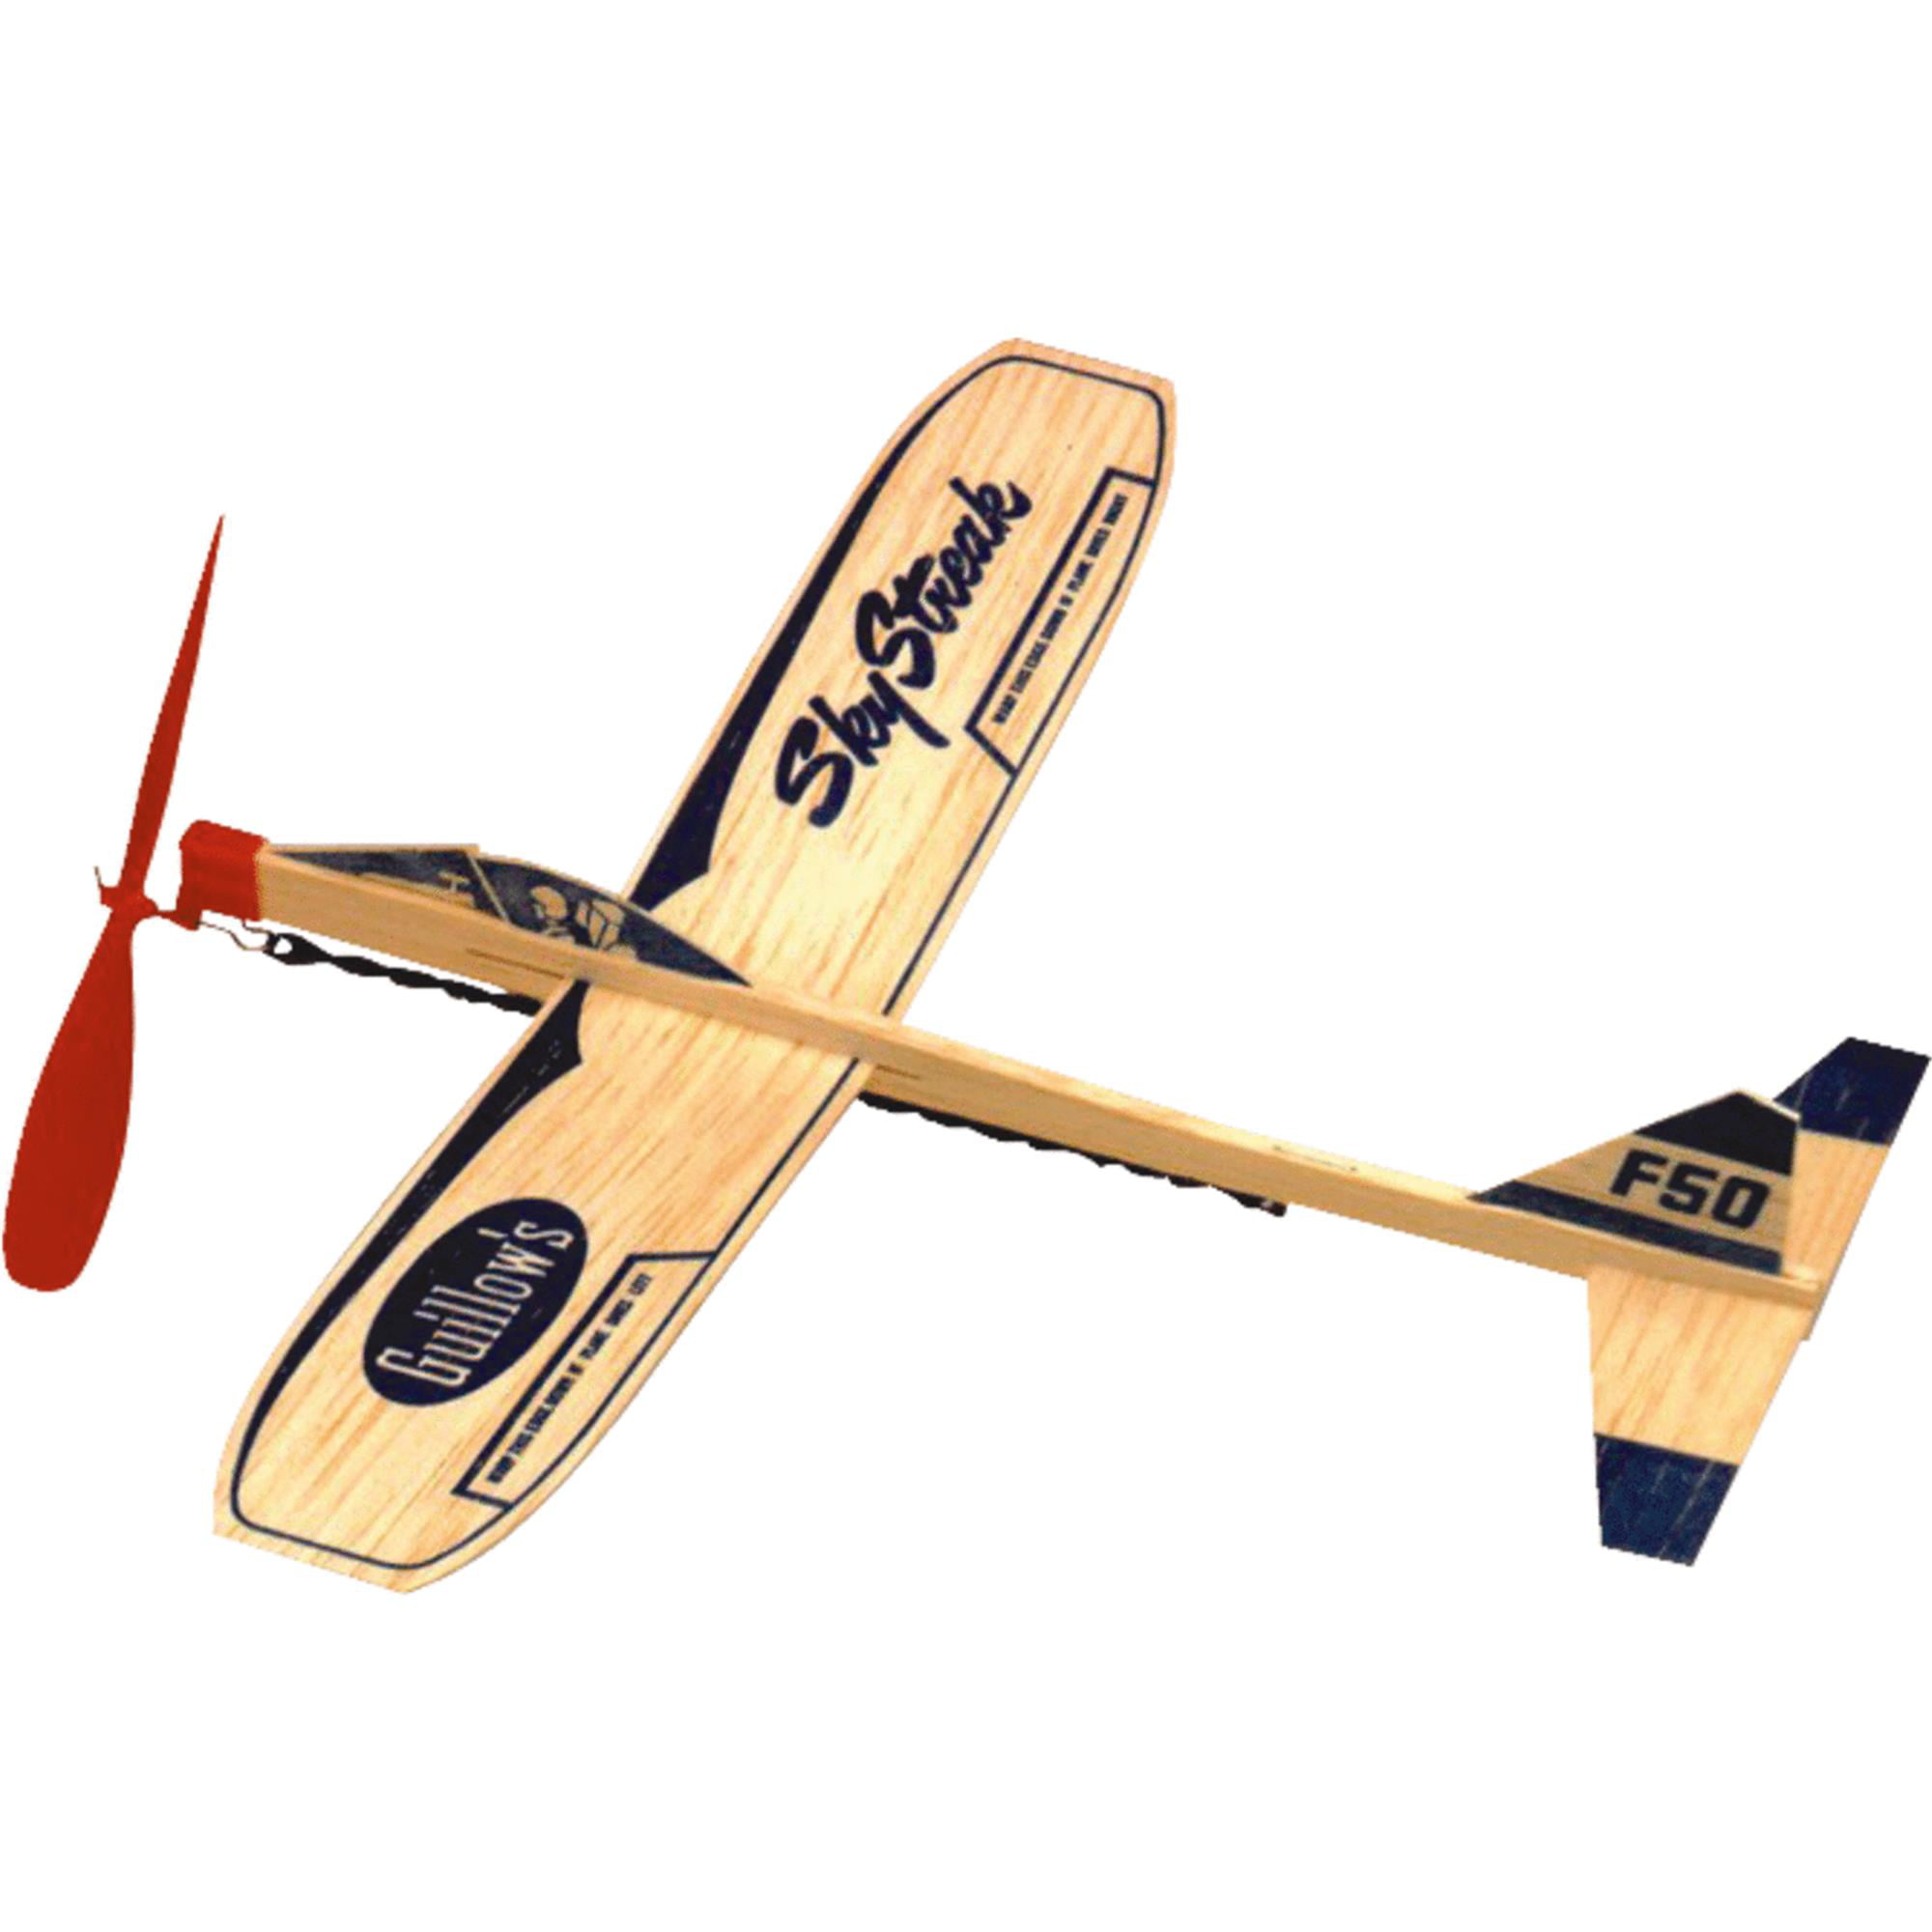 Toysmith 50 Guillows Sky Streak Glider